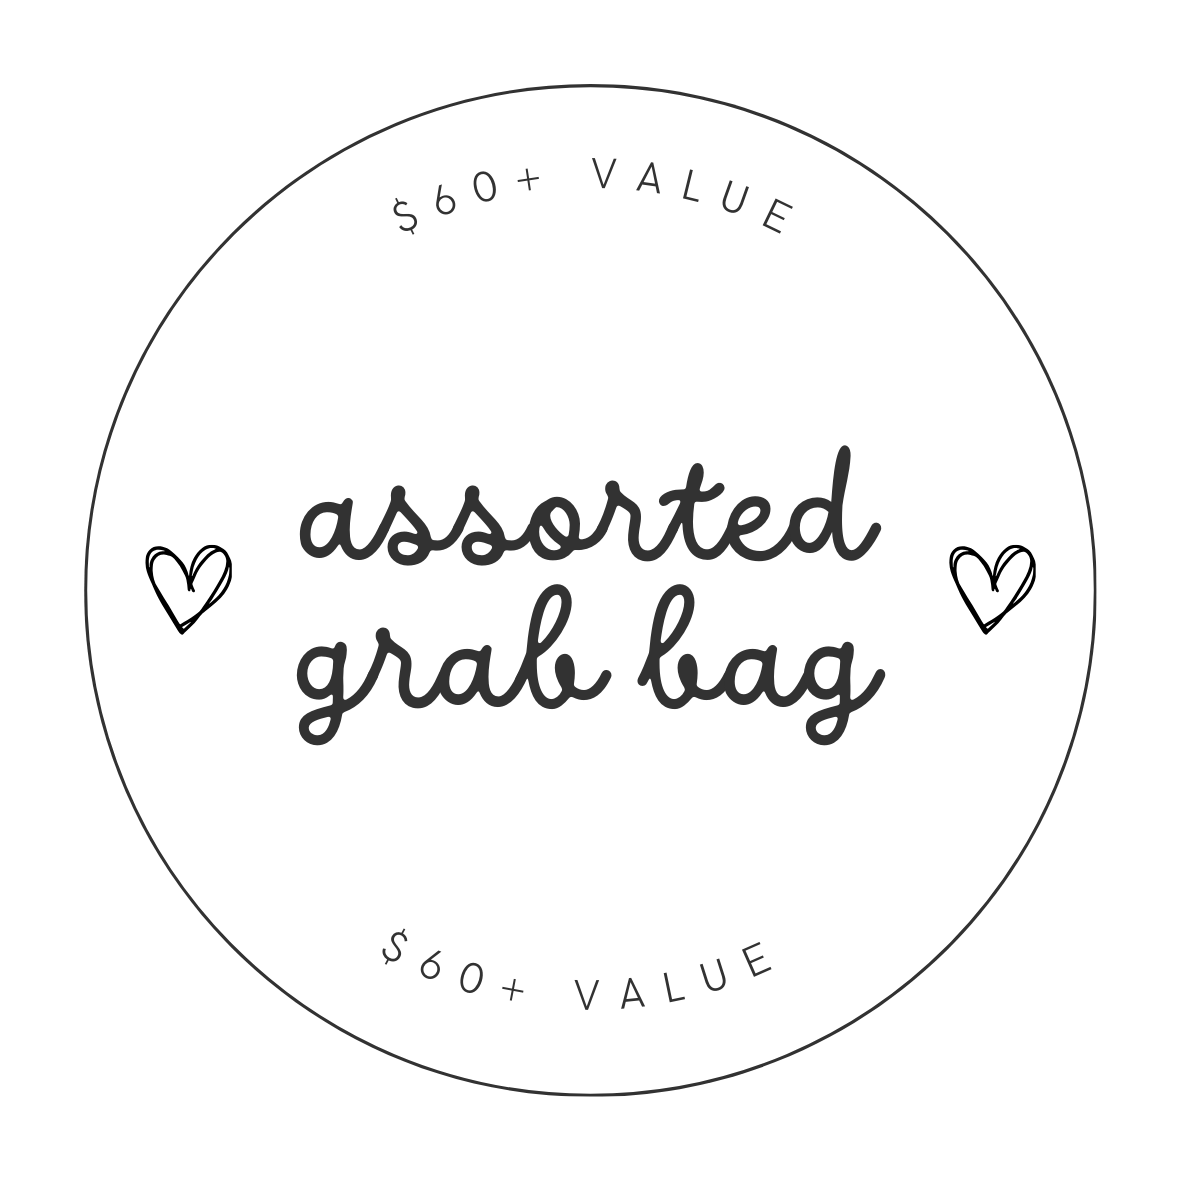 Assorted Grab Bag ($60 Value)